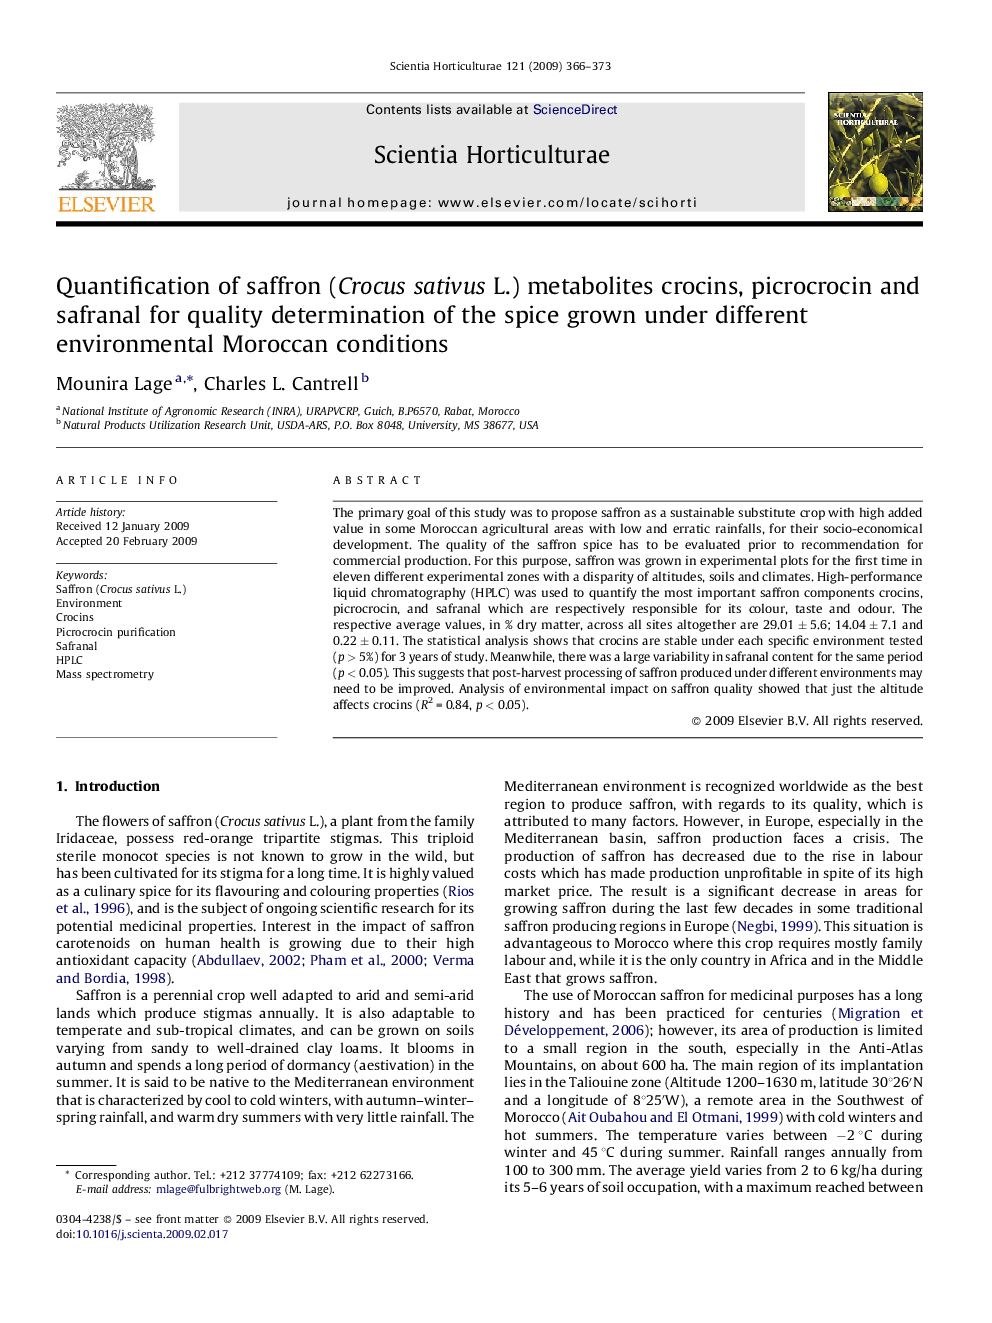 Quantification of saffron (Crocus sativus L.) metabolites crocins, picrocrocin and safranal for quality determination of the spice grown under different environmental Moroccan conditions